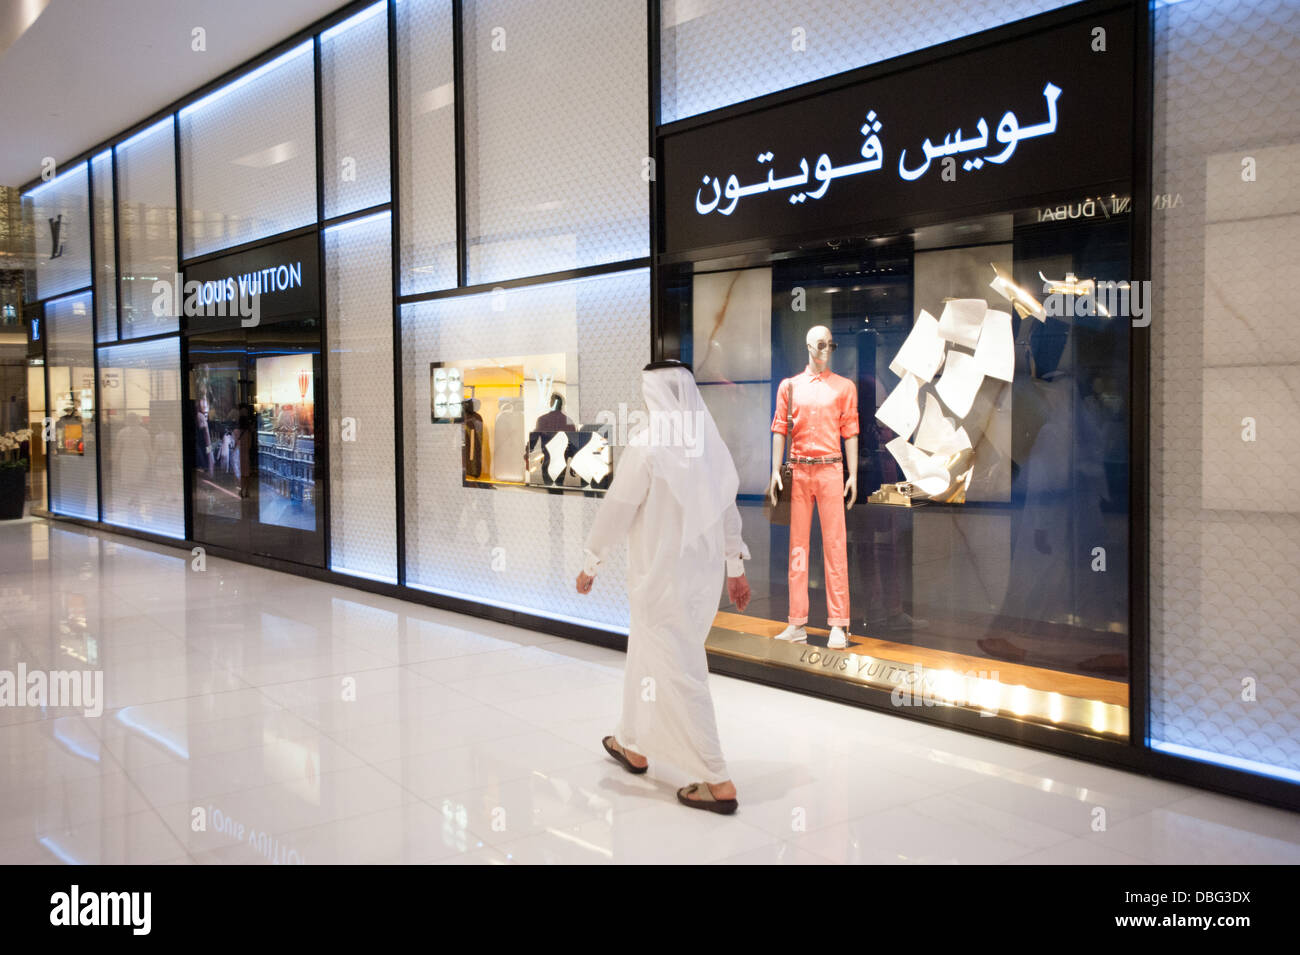 Louis Vuitton. The Dubai Mall. Stock Photo